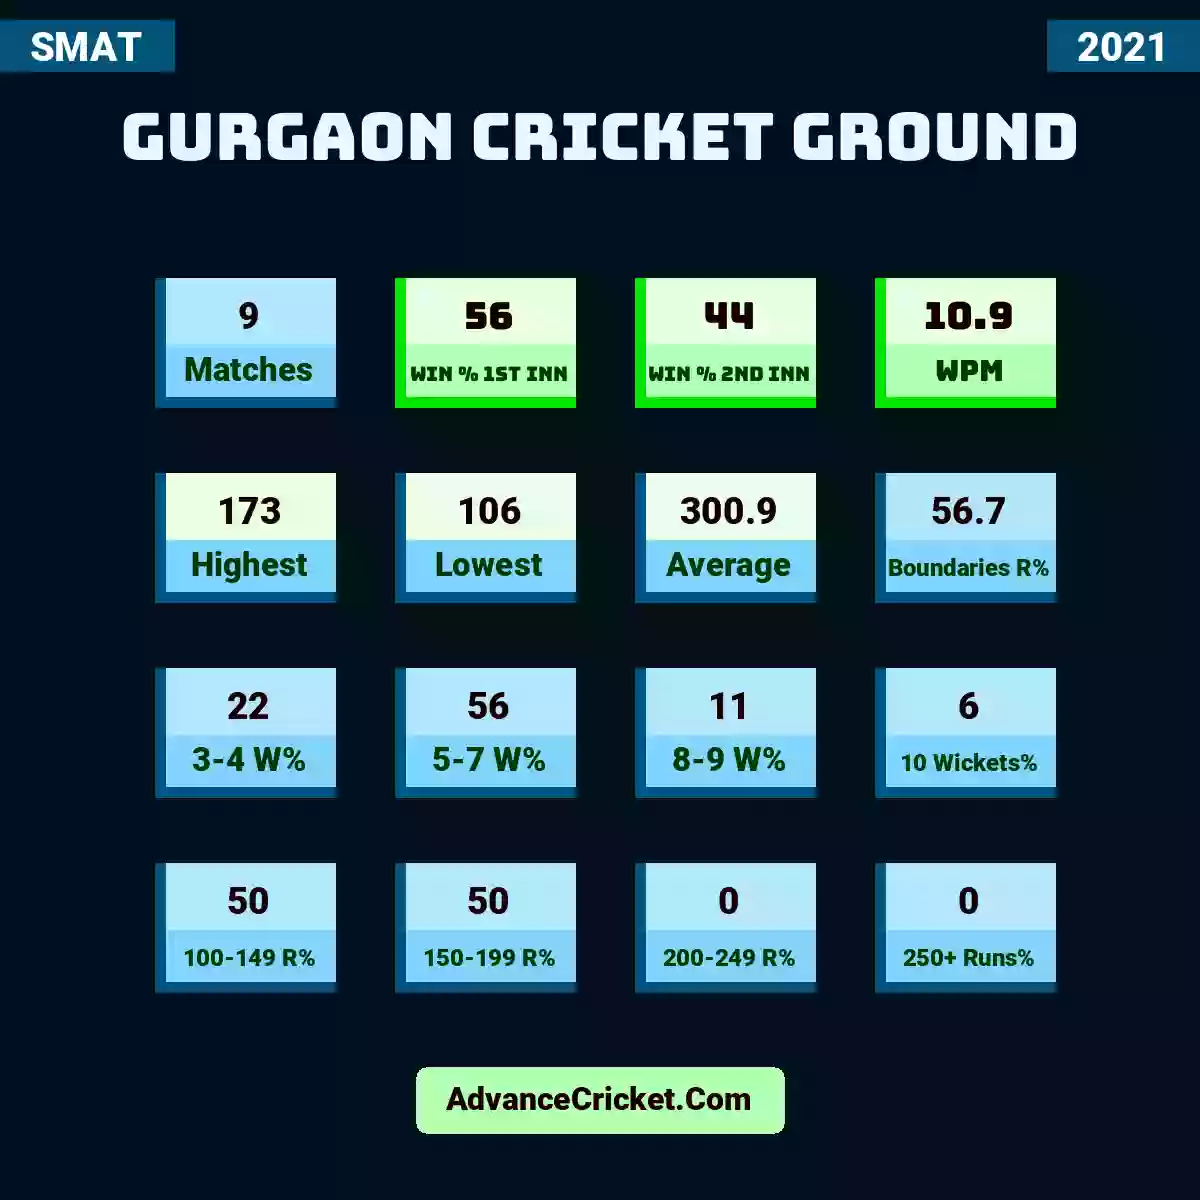 Image showing Gurgaon Cricket Ground with Matches: 9, Win % 1st Inn: 56, Win % 2nd Inn: 44, WPM: 10.9, Highest: 173, Lowest: 106, Average: 300.9, Boundaries R%: 56.7, 3-4 W%: 22, 5-7 W%: 56, 8-9 W%: 11, 10 Wickets%: 6, 100-149 R%: 50, 150-199 R%: 50, 200-249 R%: 0, 250+ Runs%: 0.